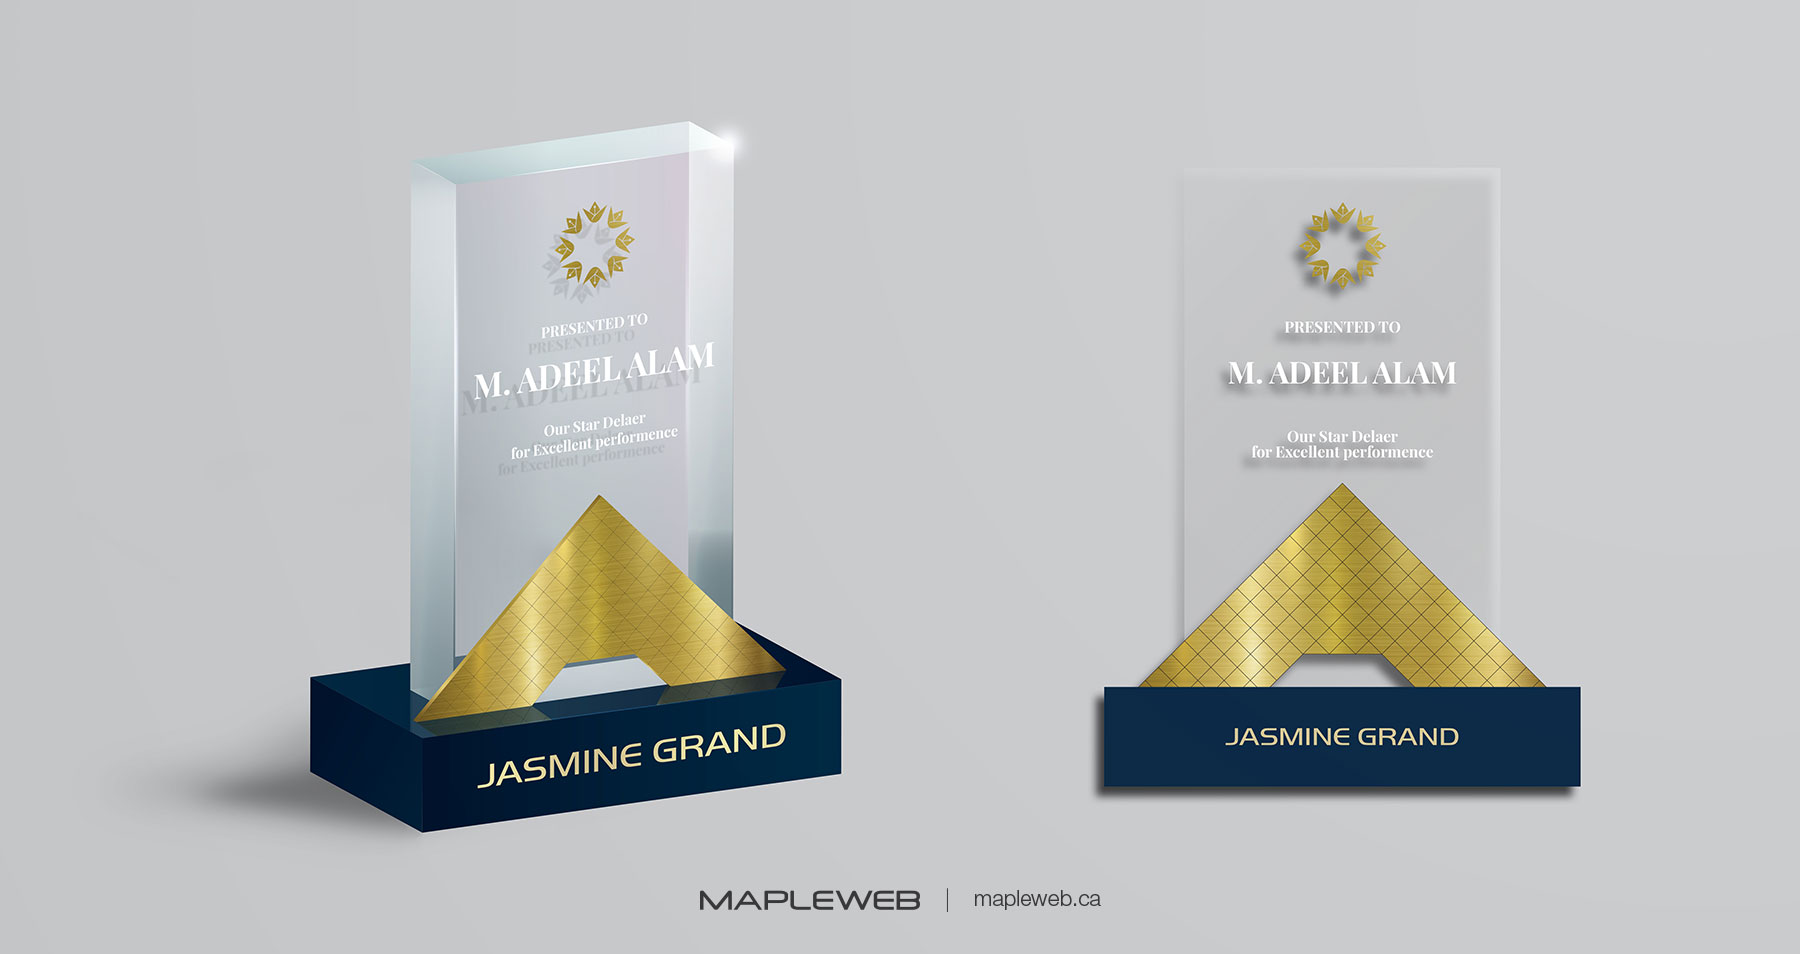 Jasmine Grand Mall Award Shield Displaying Logo Brand design by Mapleweb